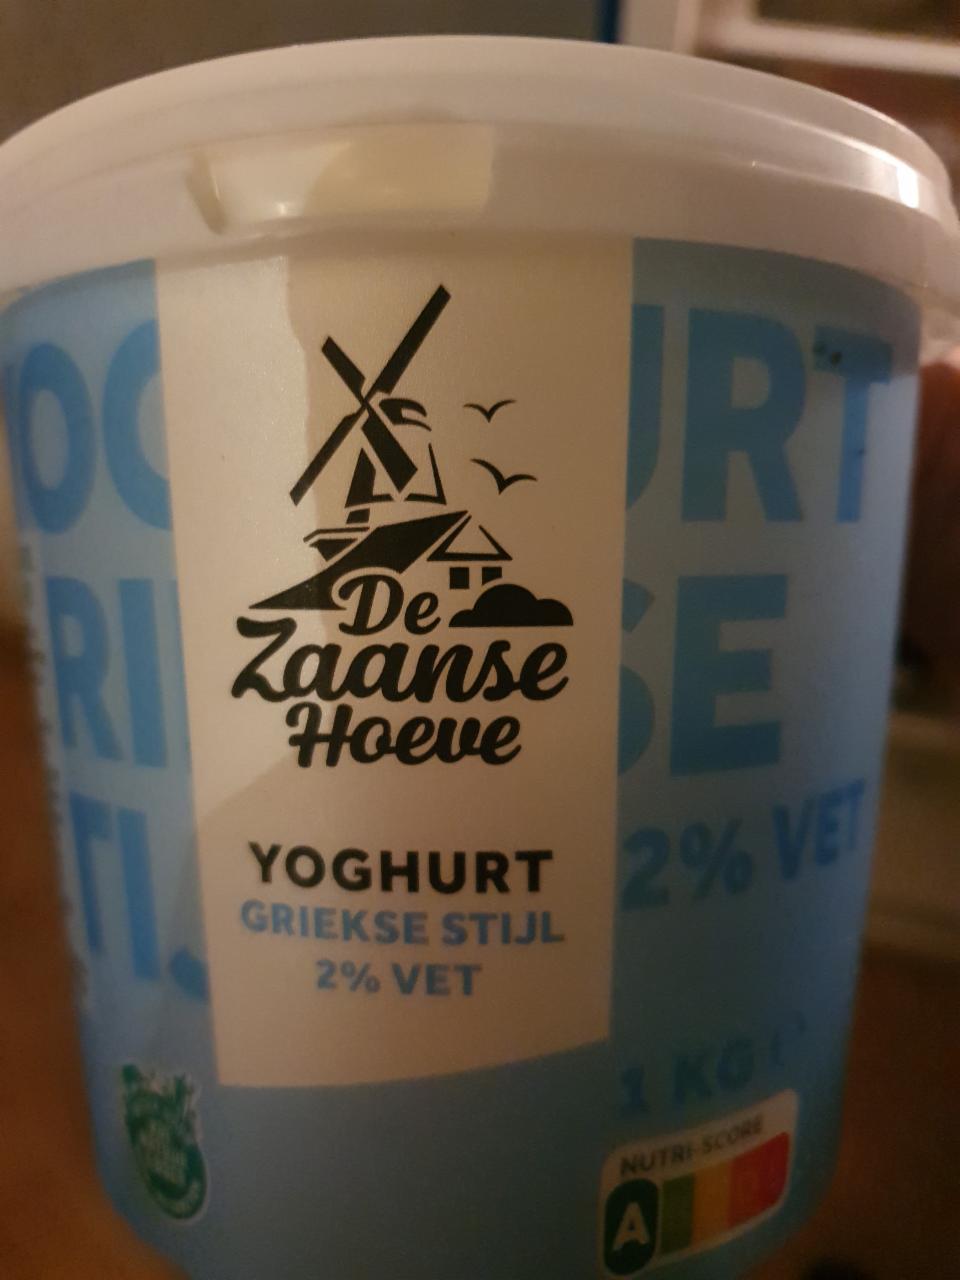 Fotografie - Yoghurt griekse stijl 2% vet De Zaanse Hoeve